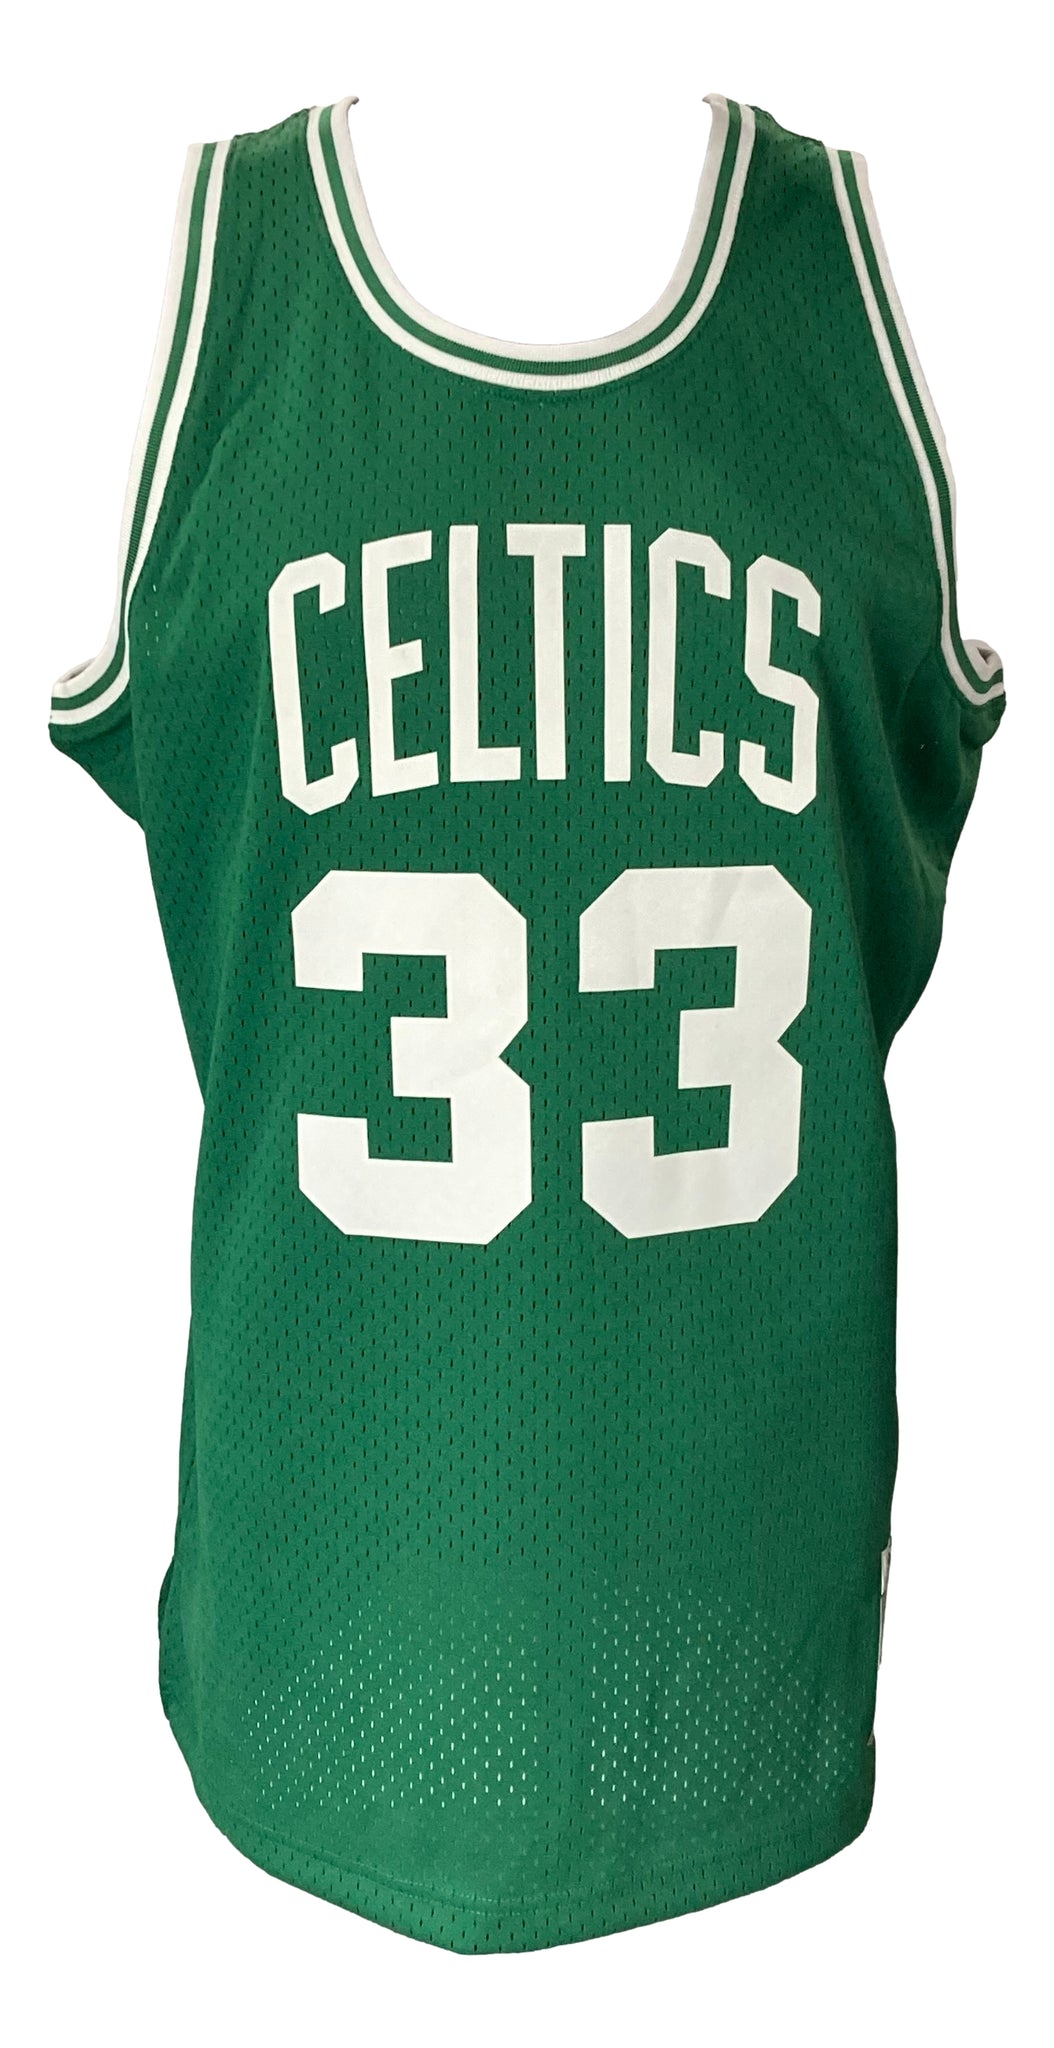 Boston Celtics Larry Bird Green Mitchell & Ness Swingman Jersey (XL)